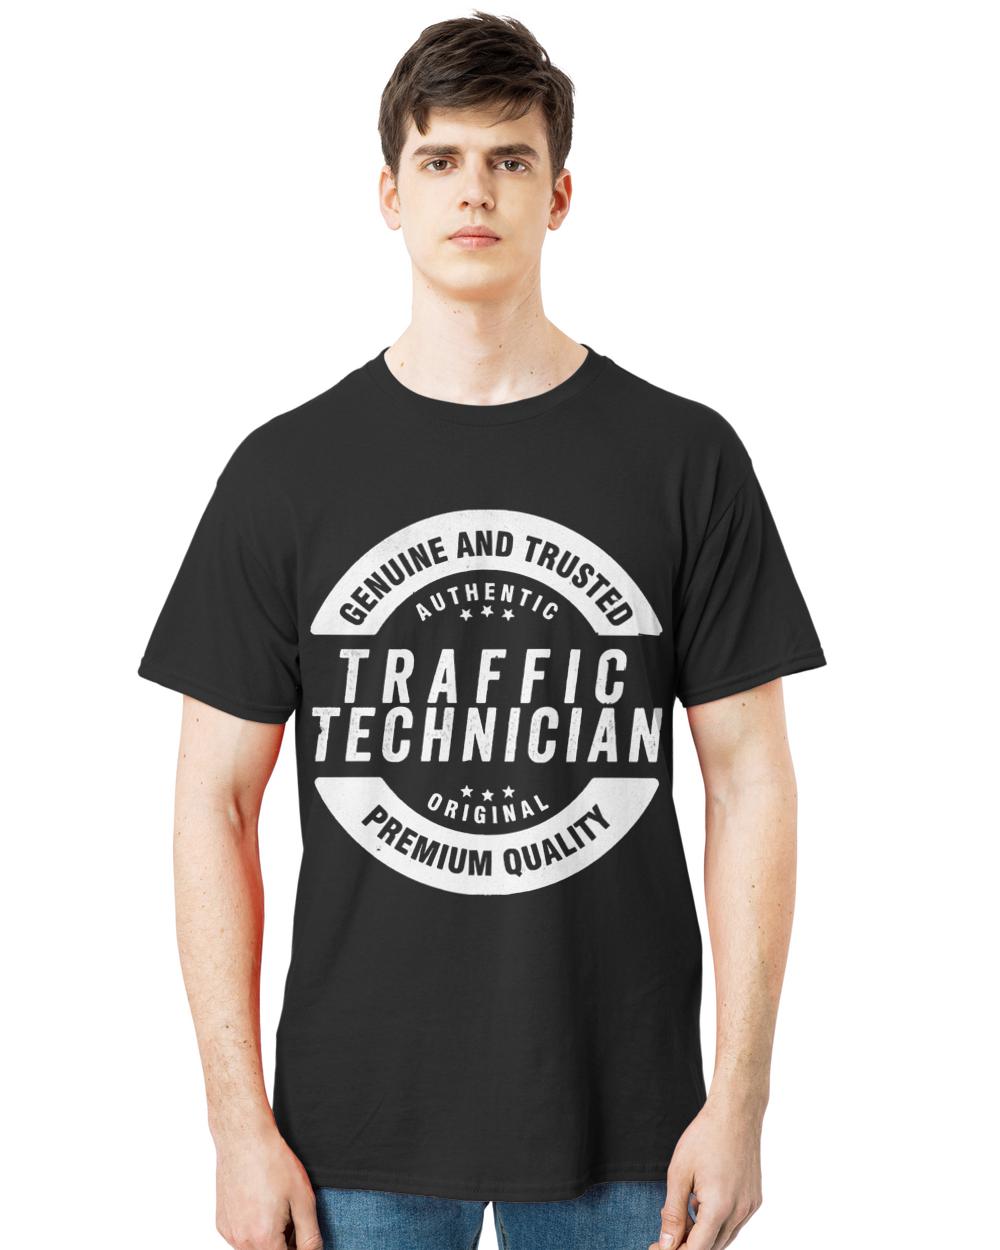 Traffic Technician T-ShirtVintage traffic technician T-Shirt